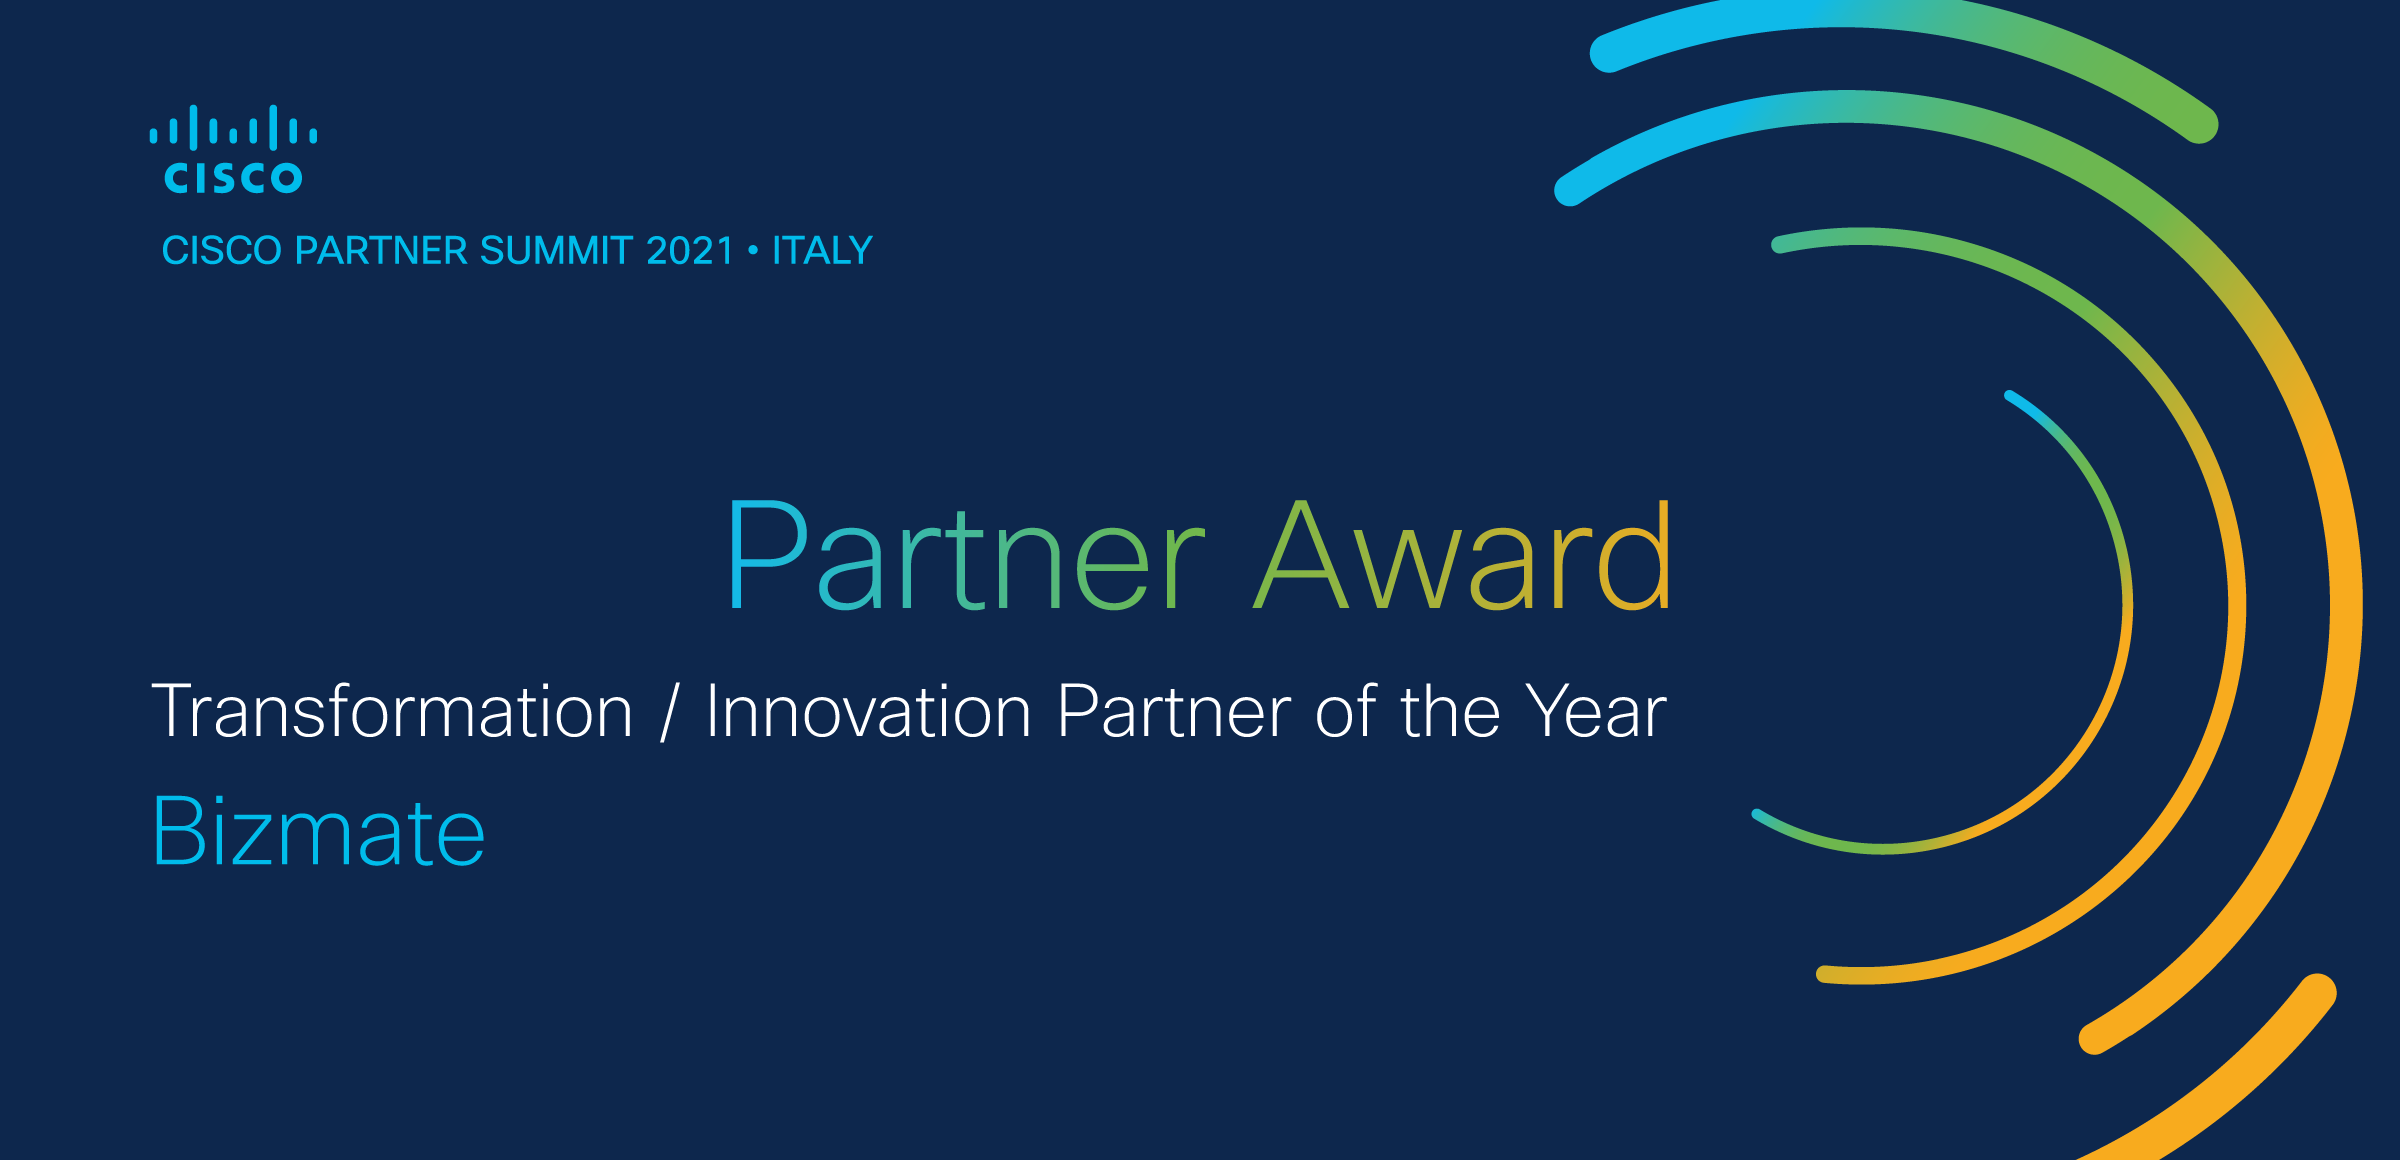 Bizmate: Cisco Transformation / Innovation Partner of the Year